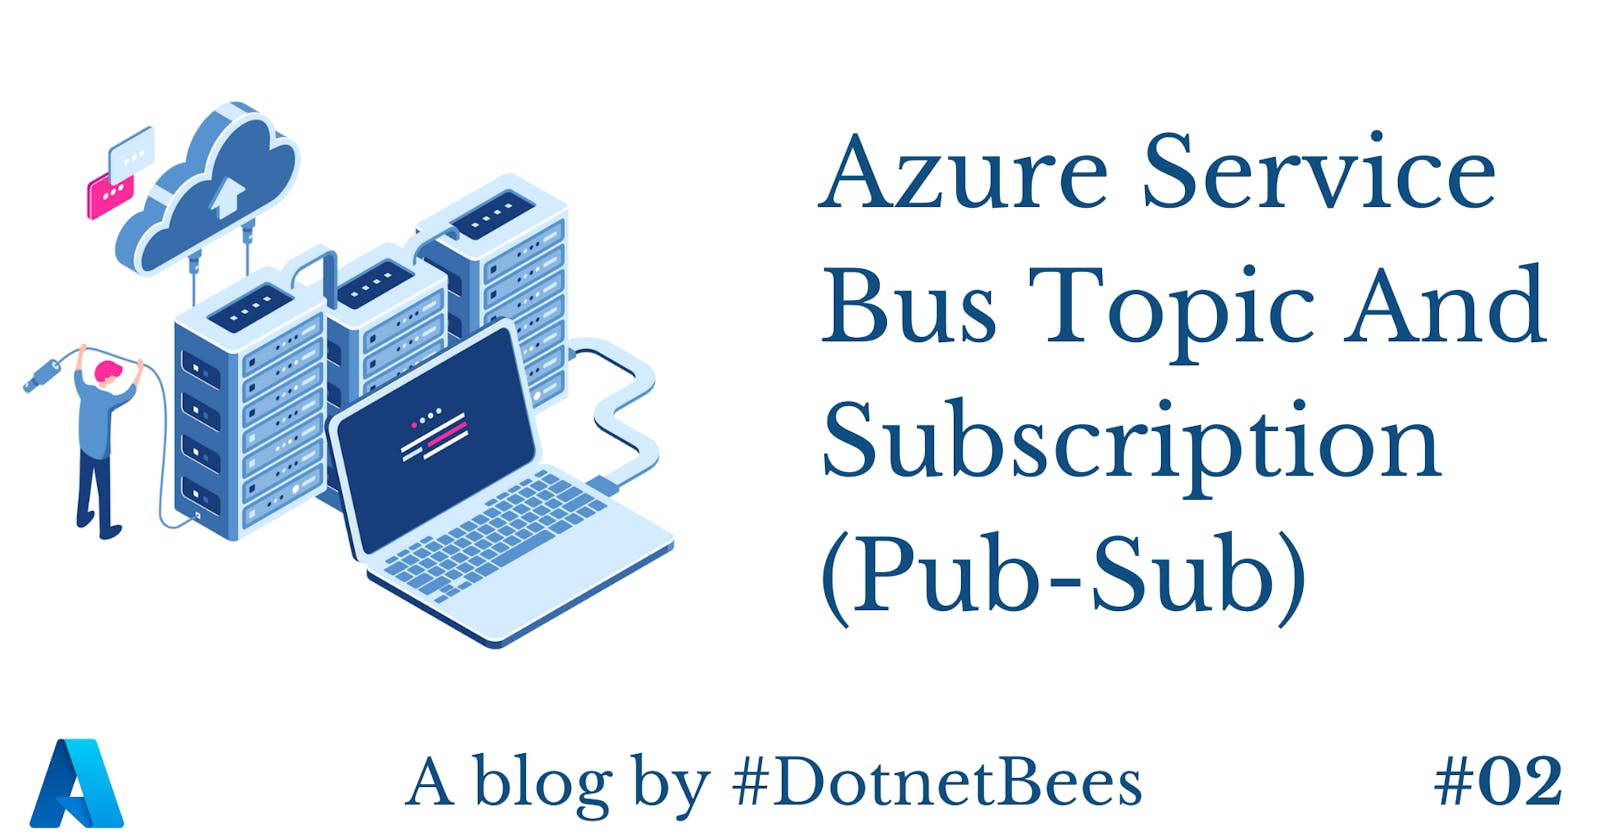 Azure Service Bus Topic And Subscription (Pub-Sub)